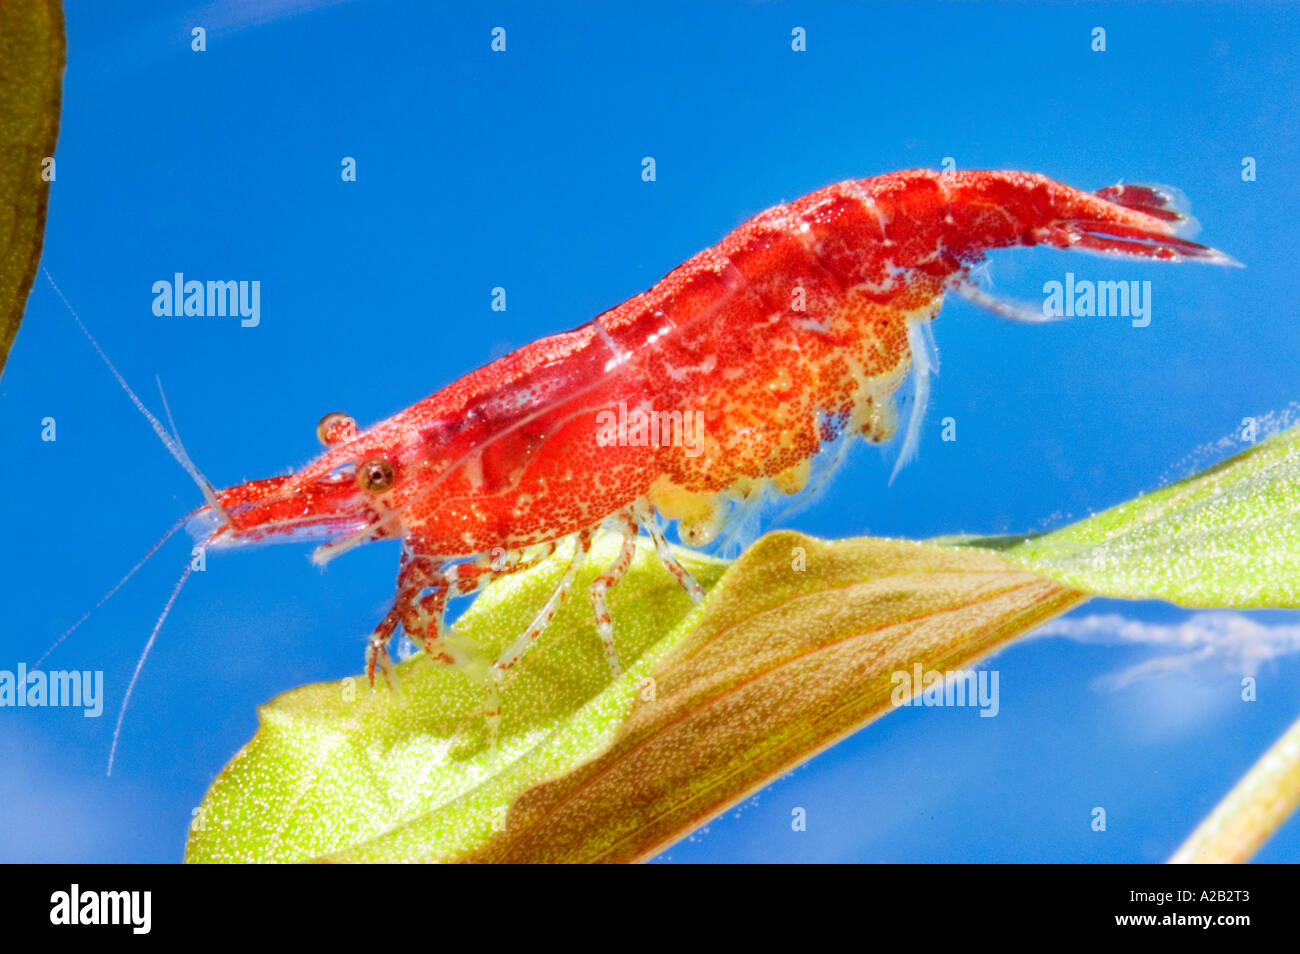 living pregnant Red Cherry red fire Redfire   Neocaridina denticulata   sinensis Cherry  shrimp Fire shrimp  pregnant gravid Stock Photo